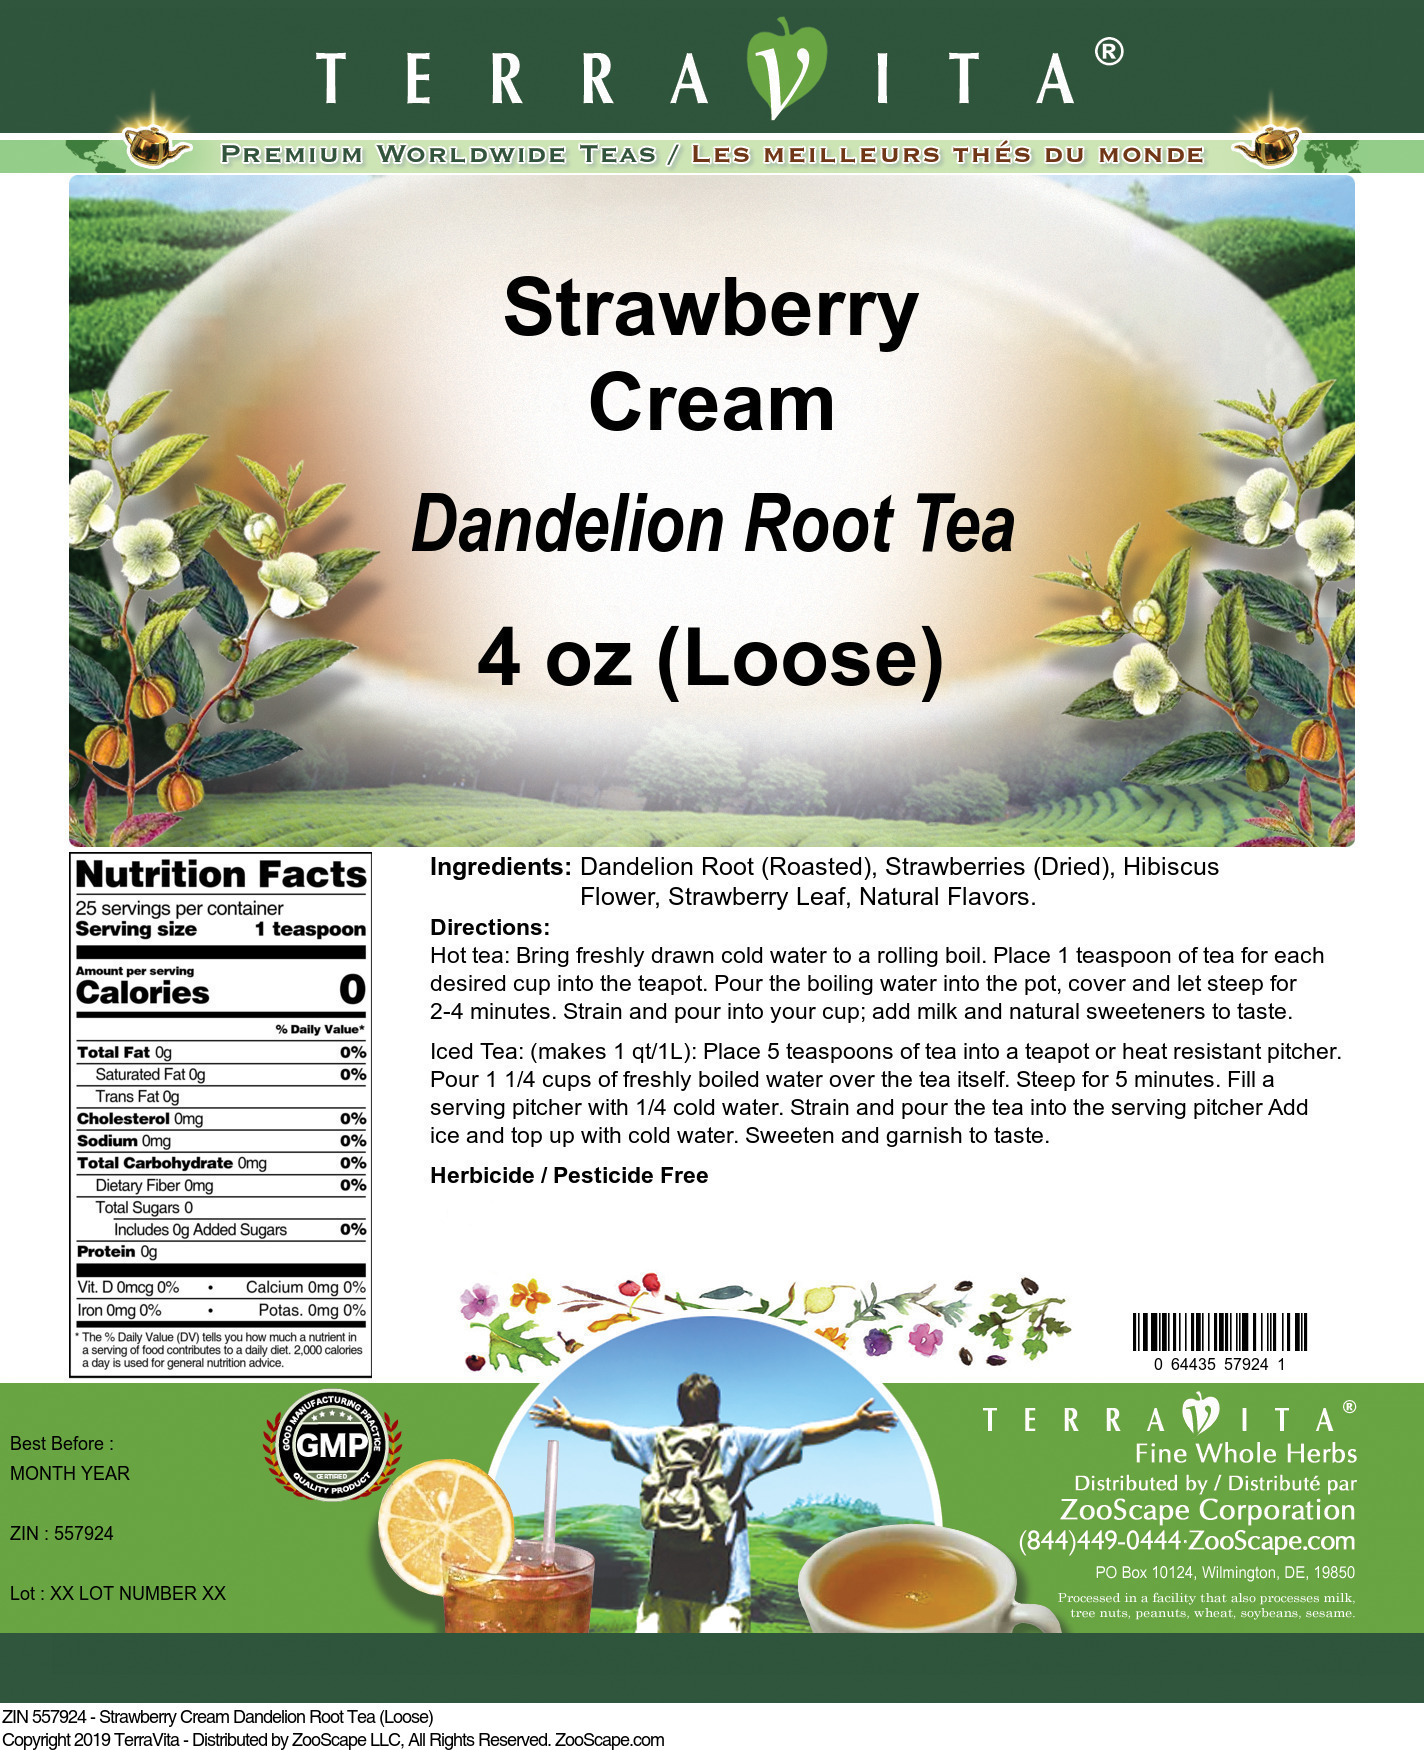 Strawberry Cream Dandelion Root Tea (Loose) - Label